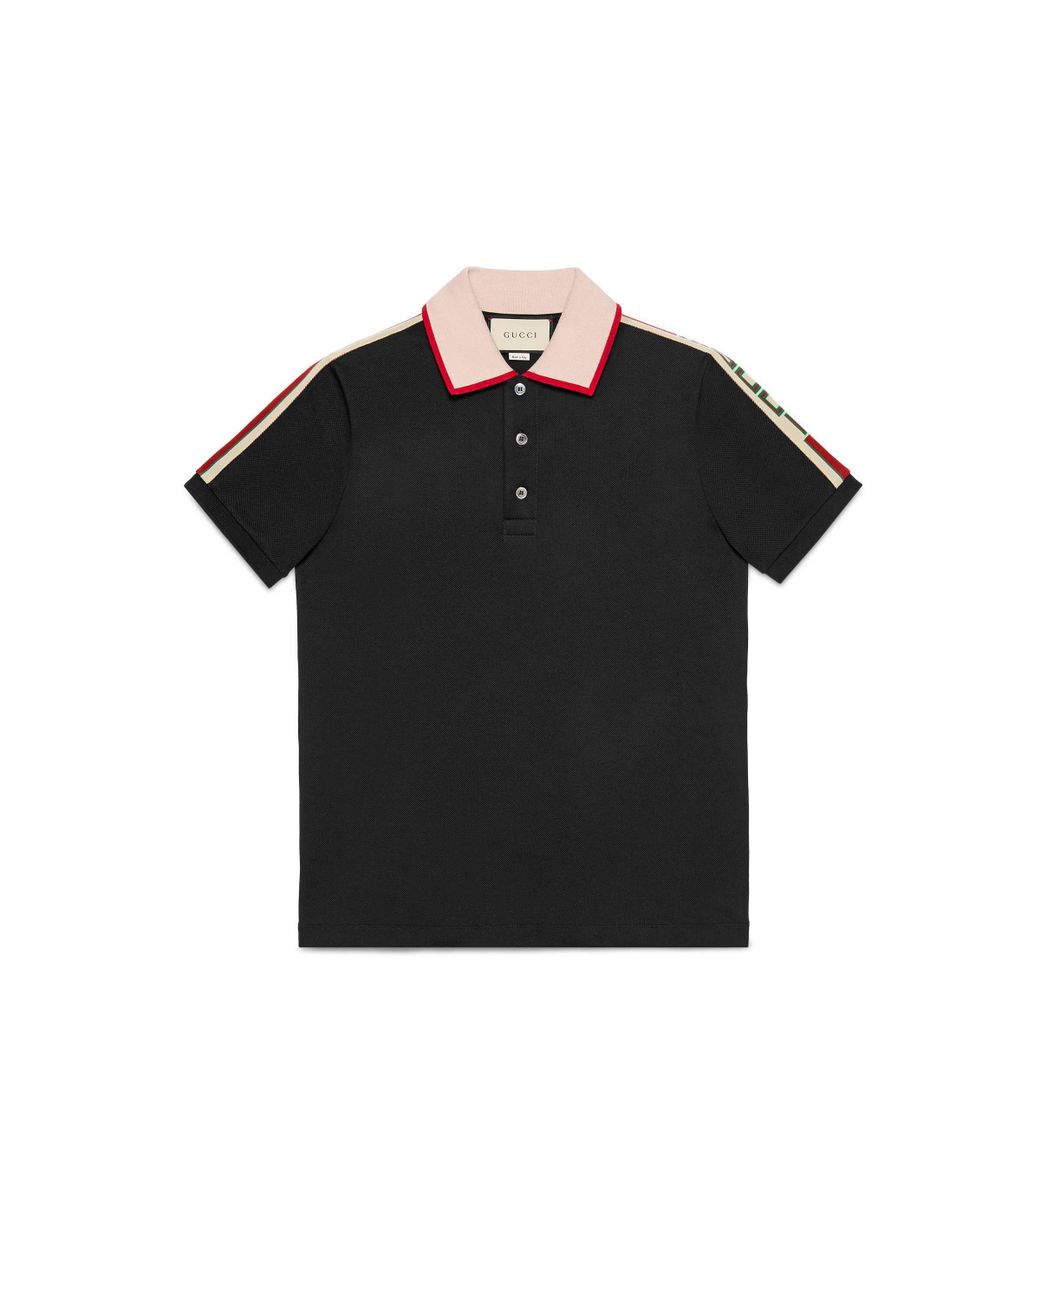 Gucci Cotton Polo With Interlocking G Stripe in Black for Men - Save 8% ...